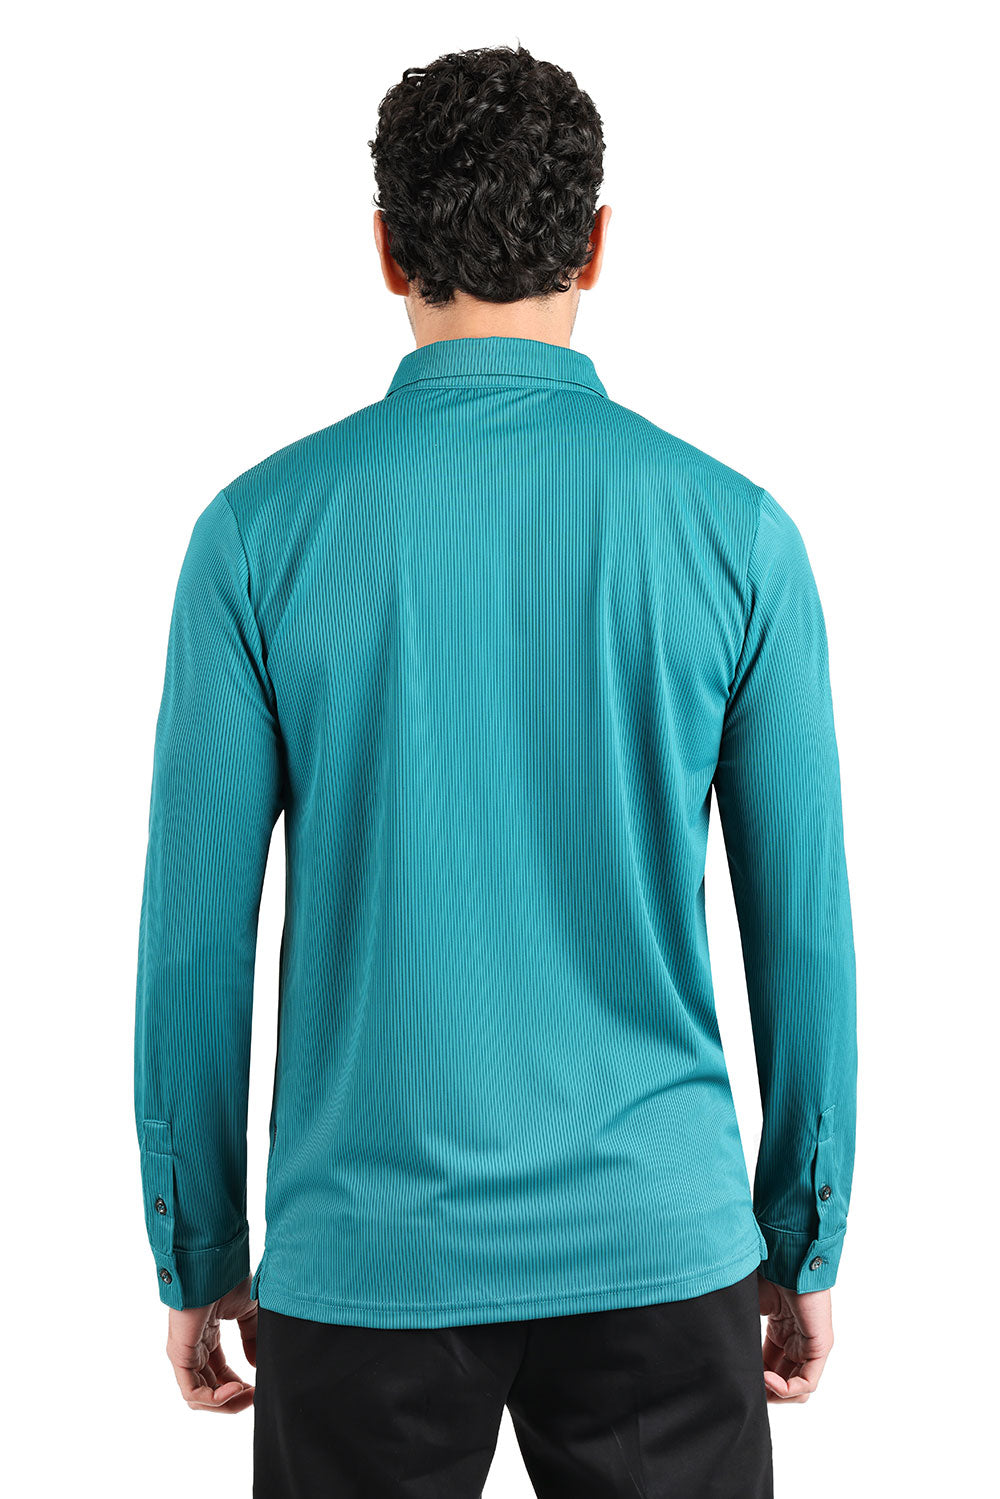 Barabas Men's Premium Solid Color Long Sleeve Polo Shirts 2DPL30 Teal